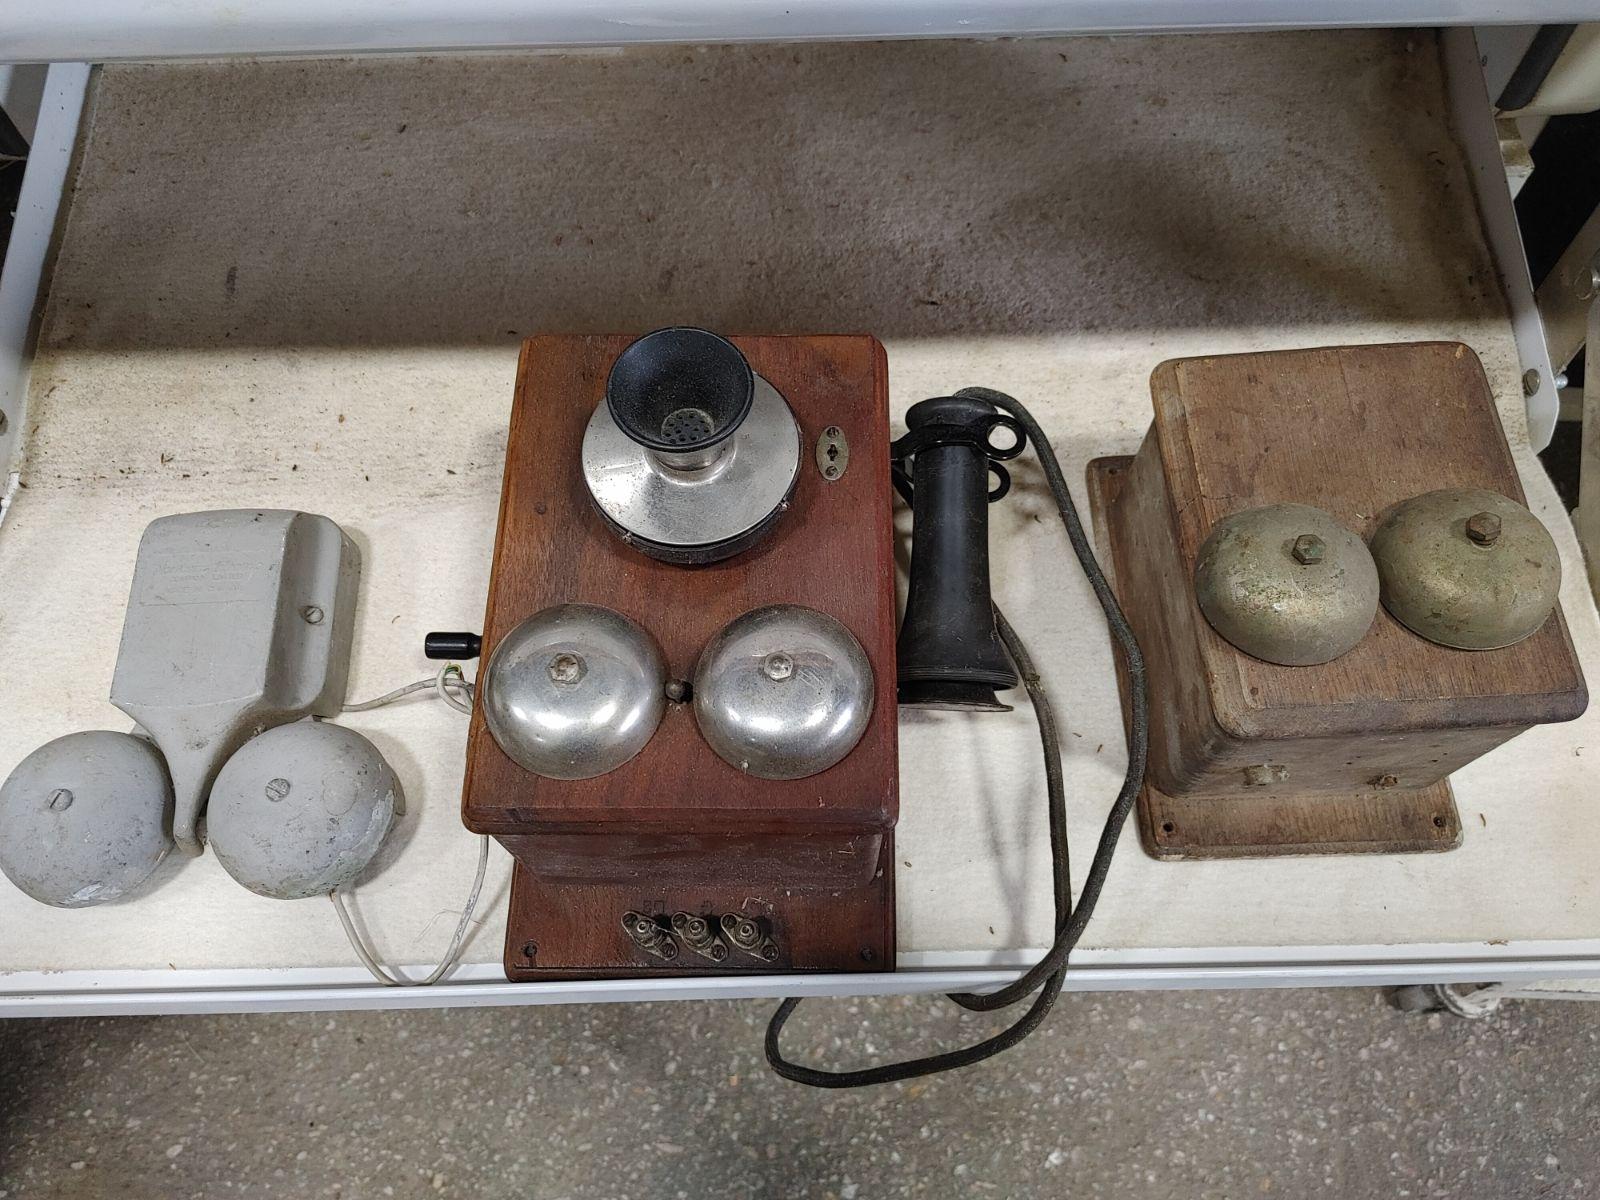 Vintage Western Electric Wallmount Telephone